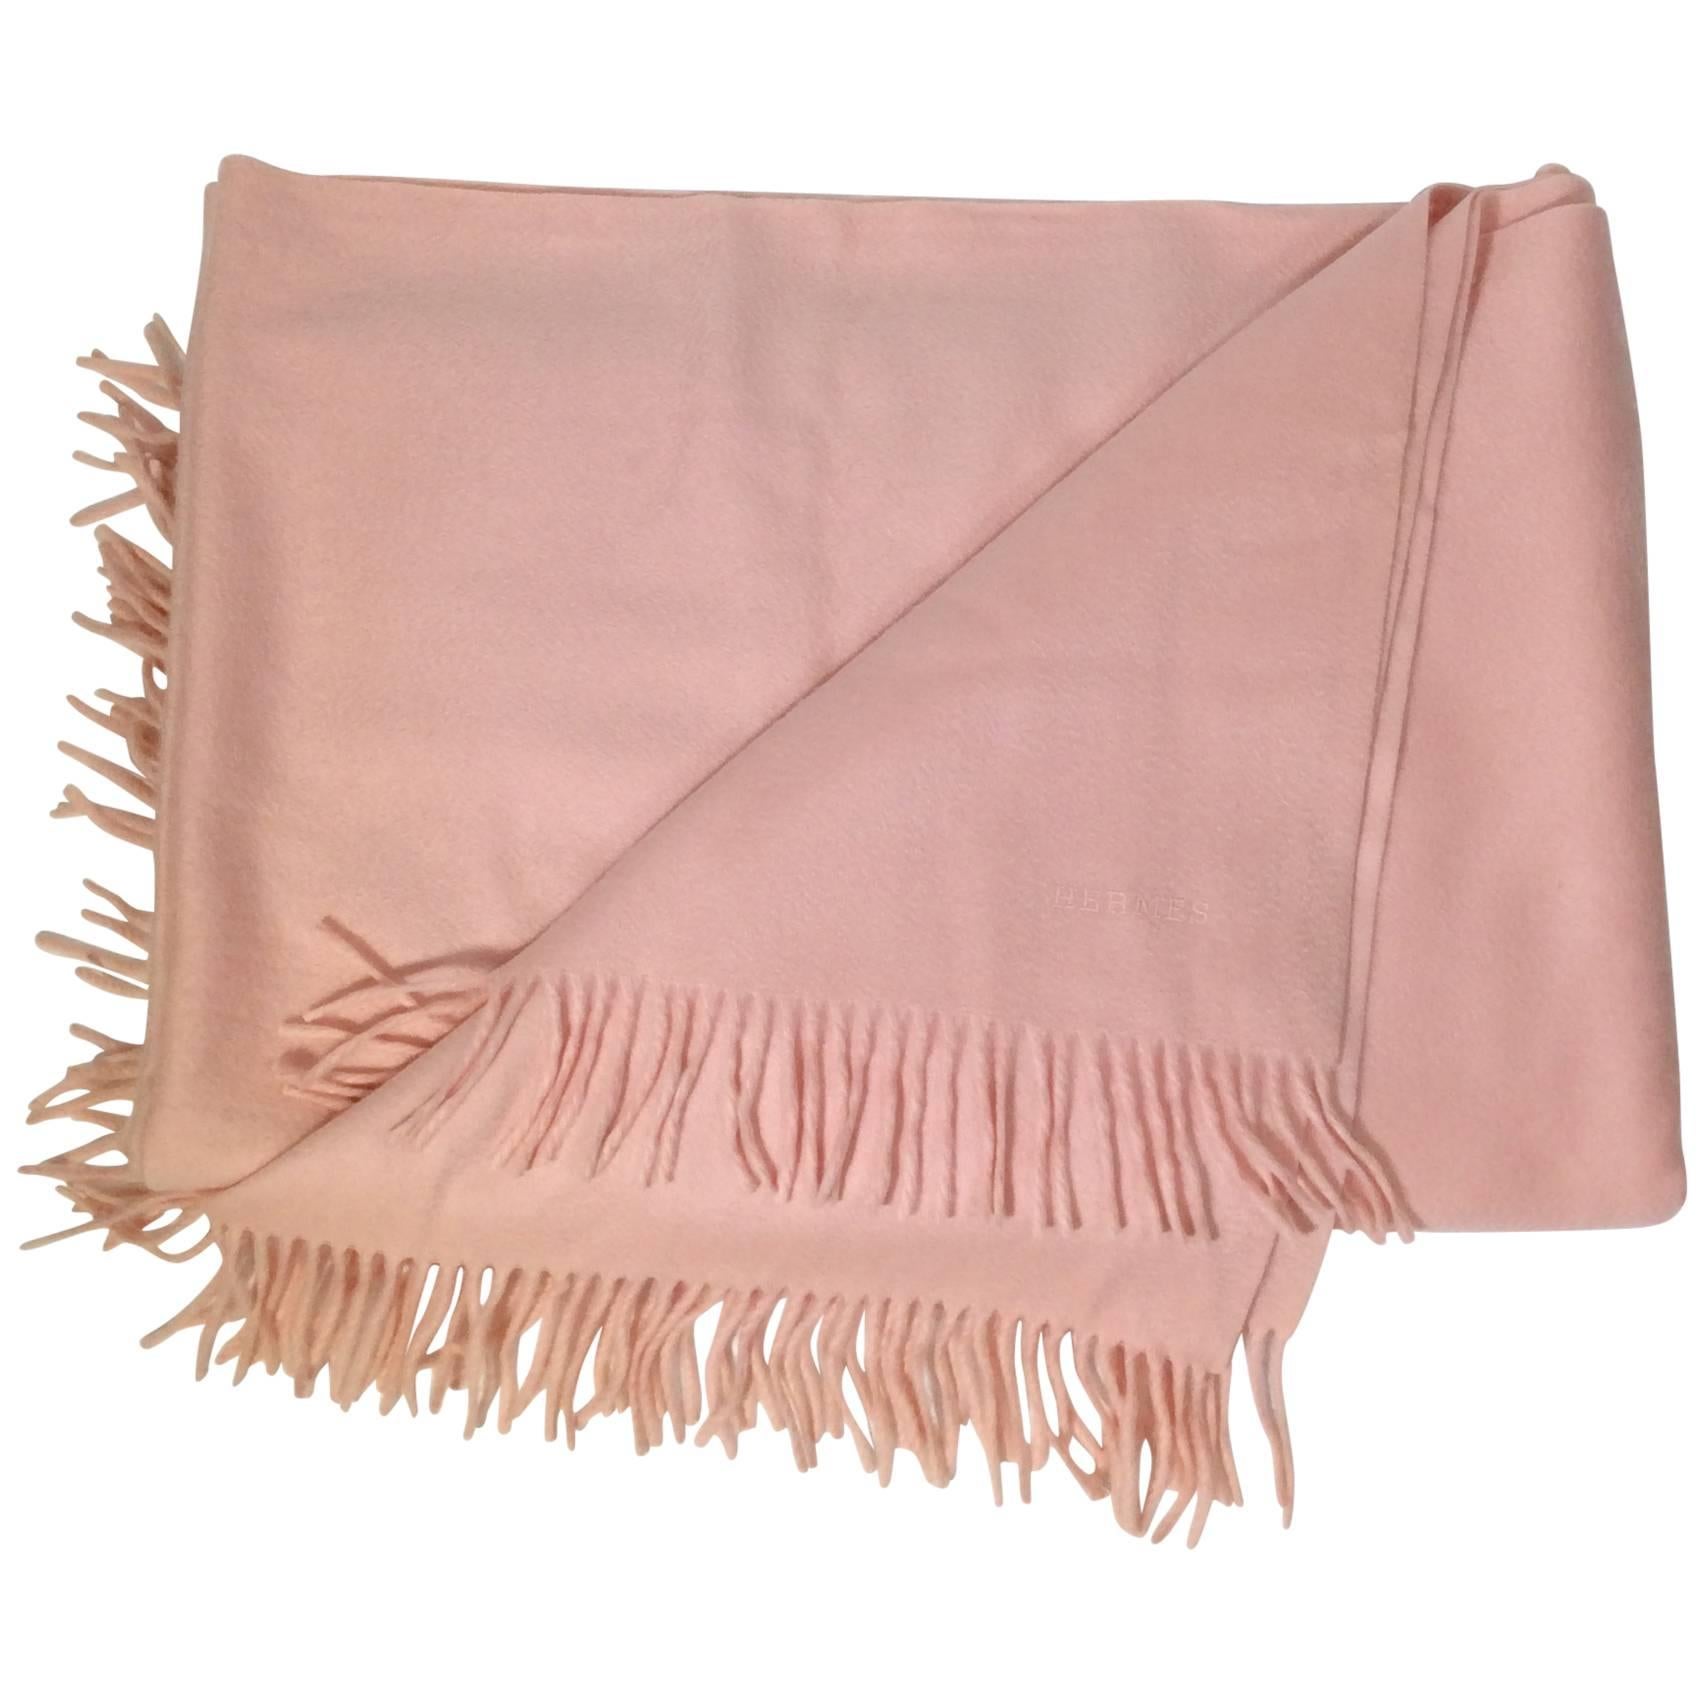 Hermes Baby Pink Cashmere Blanket